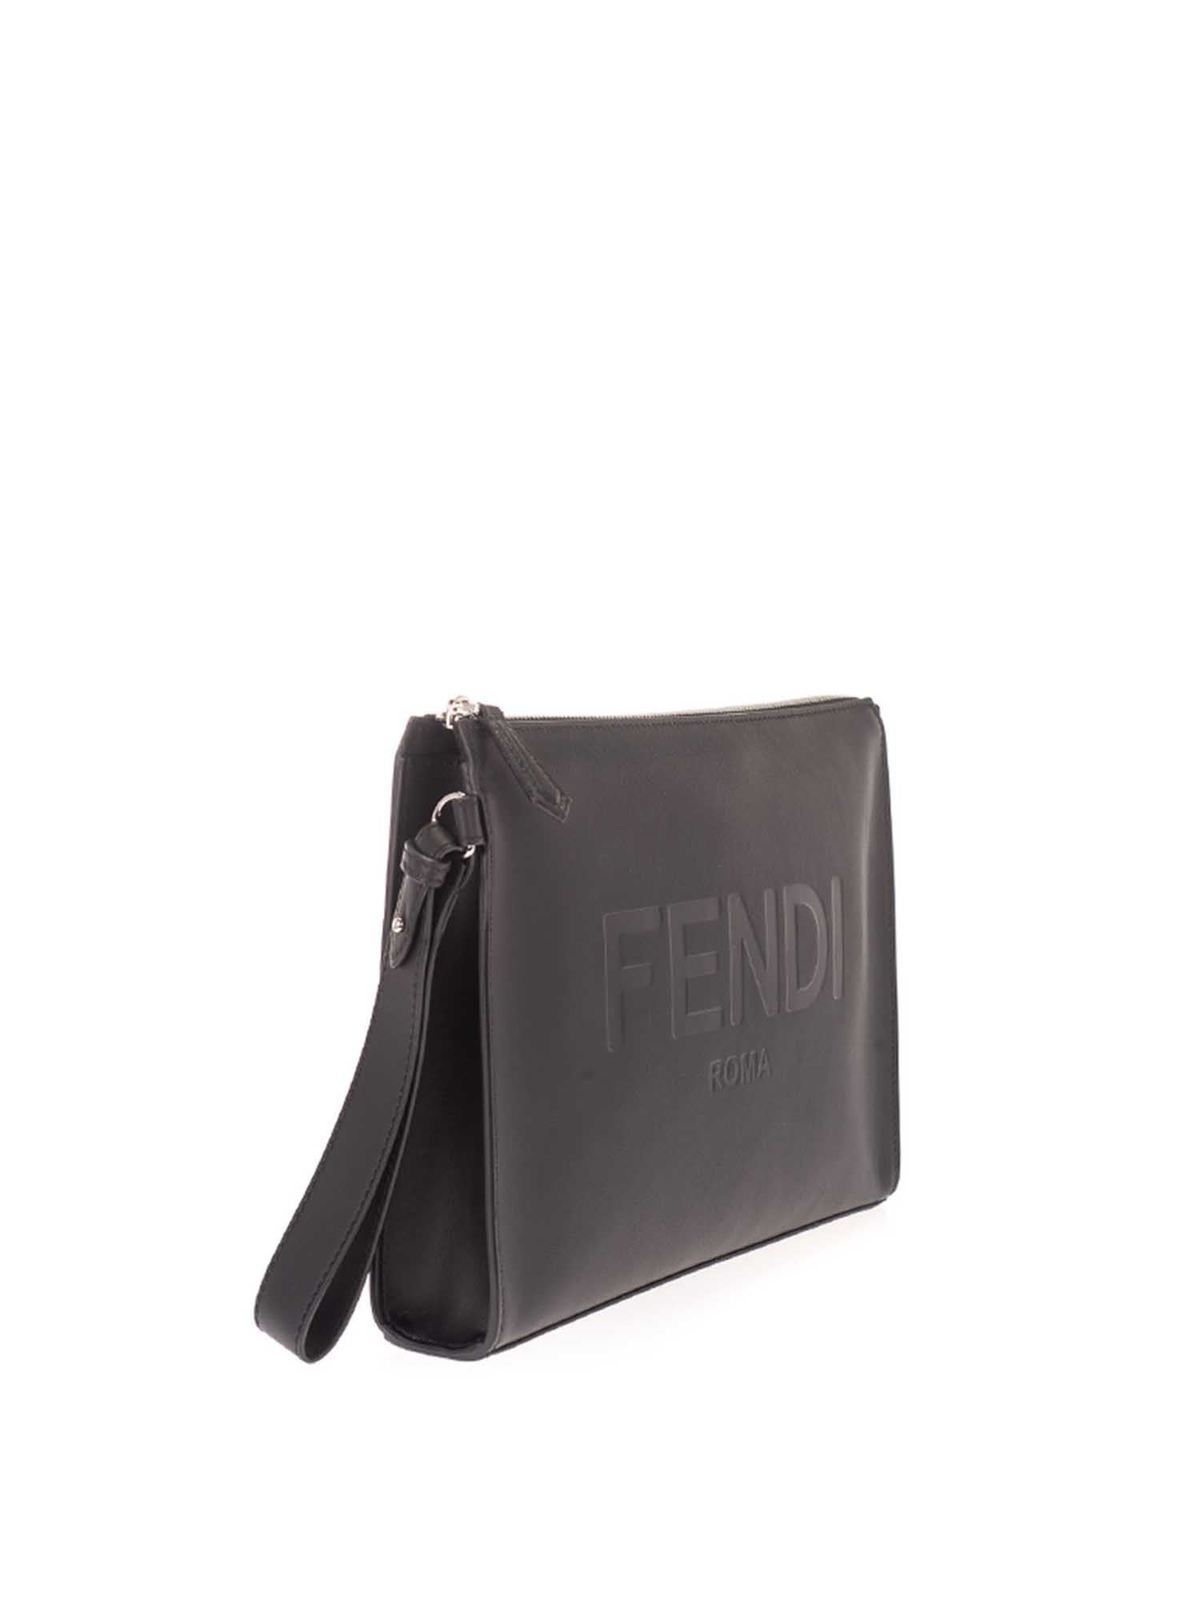 Clutches Fendi - Fendi Roma flat pouch bag in black - 7VA491AFBFF0GXN